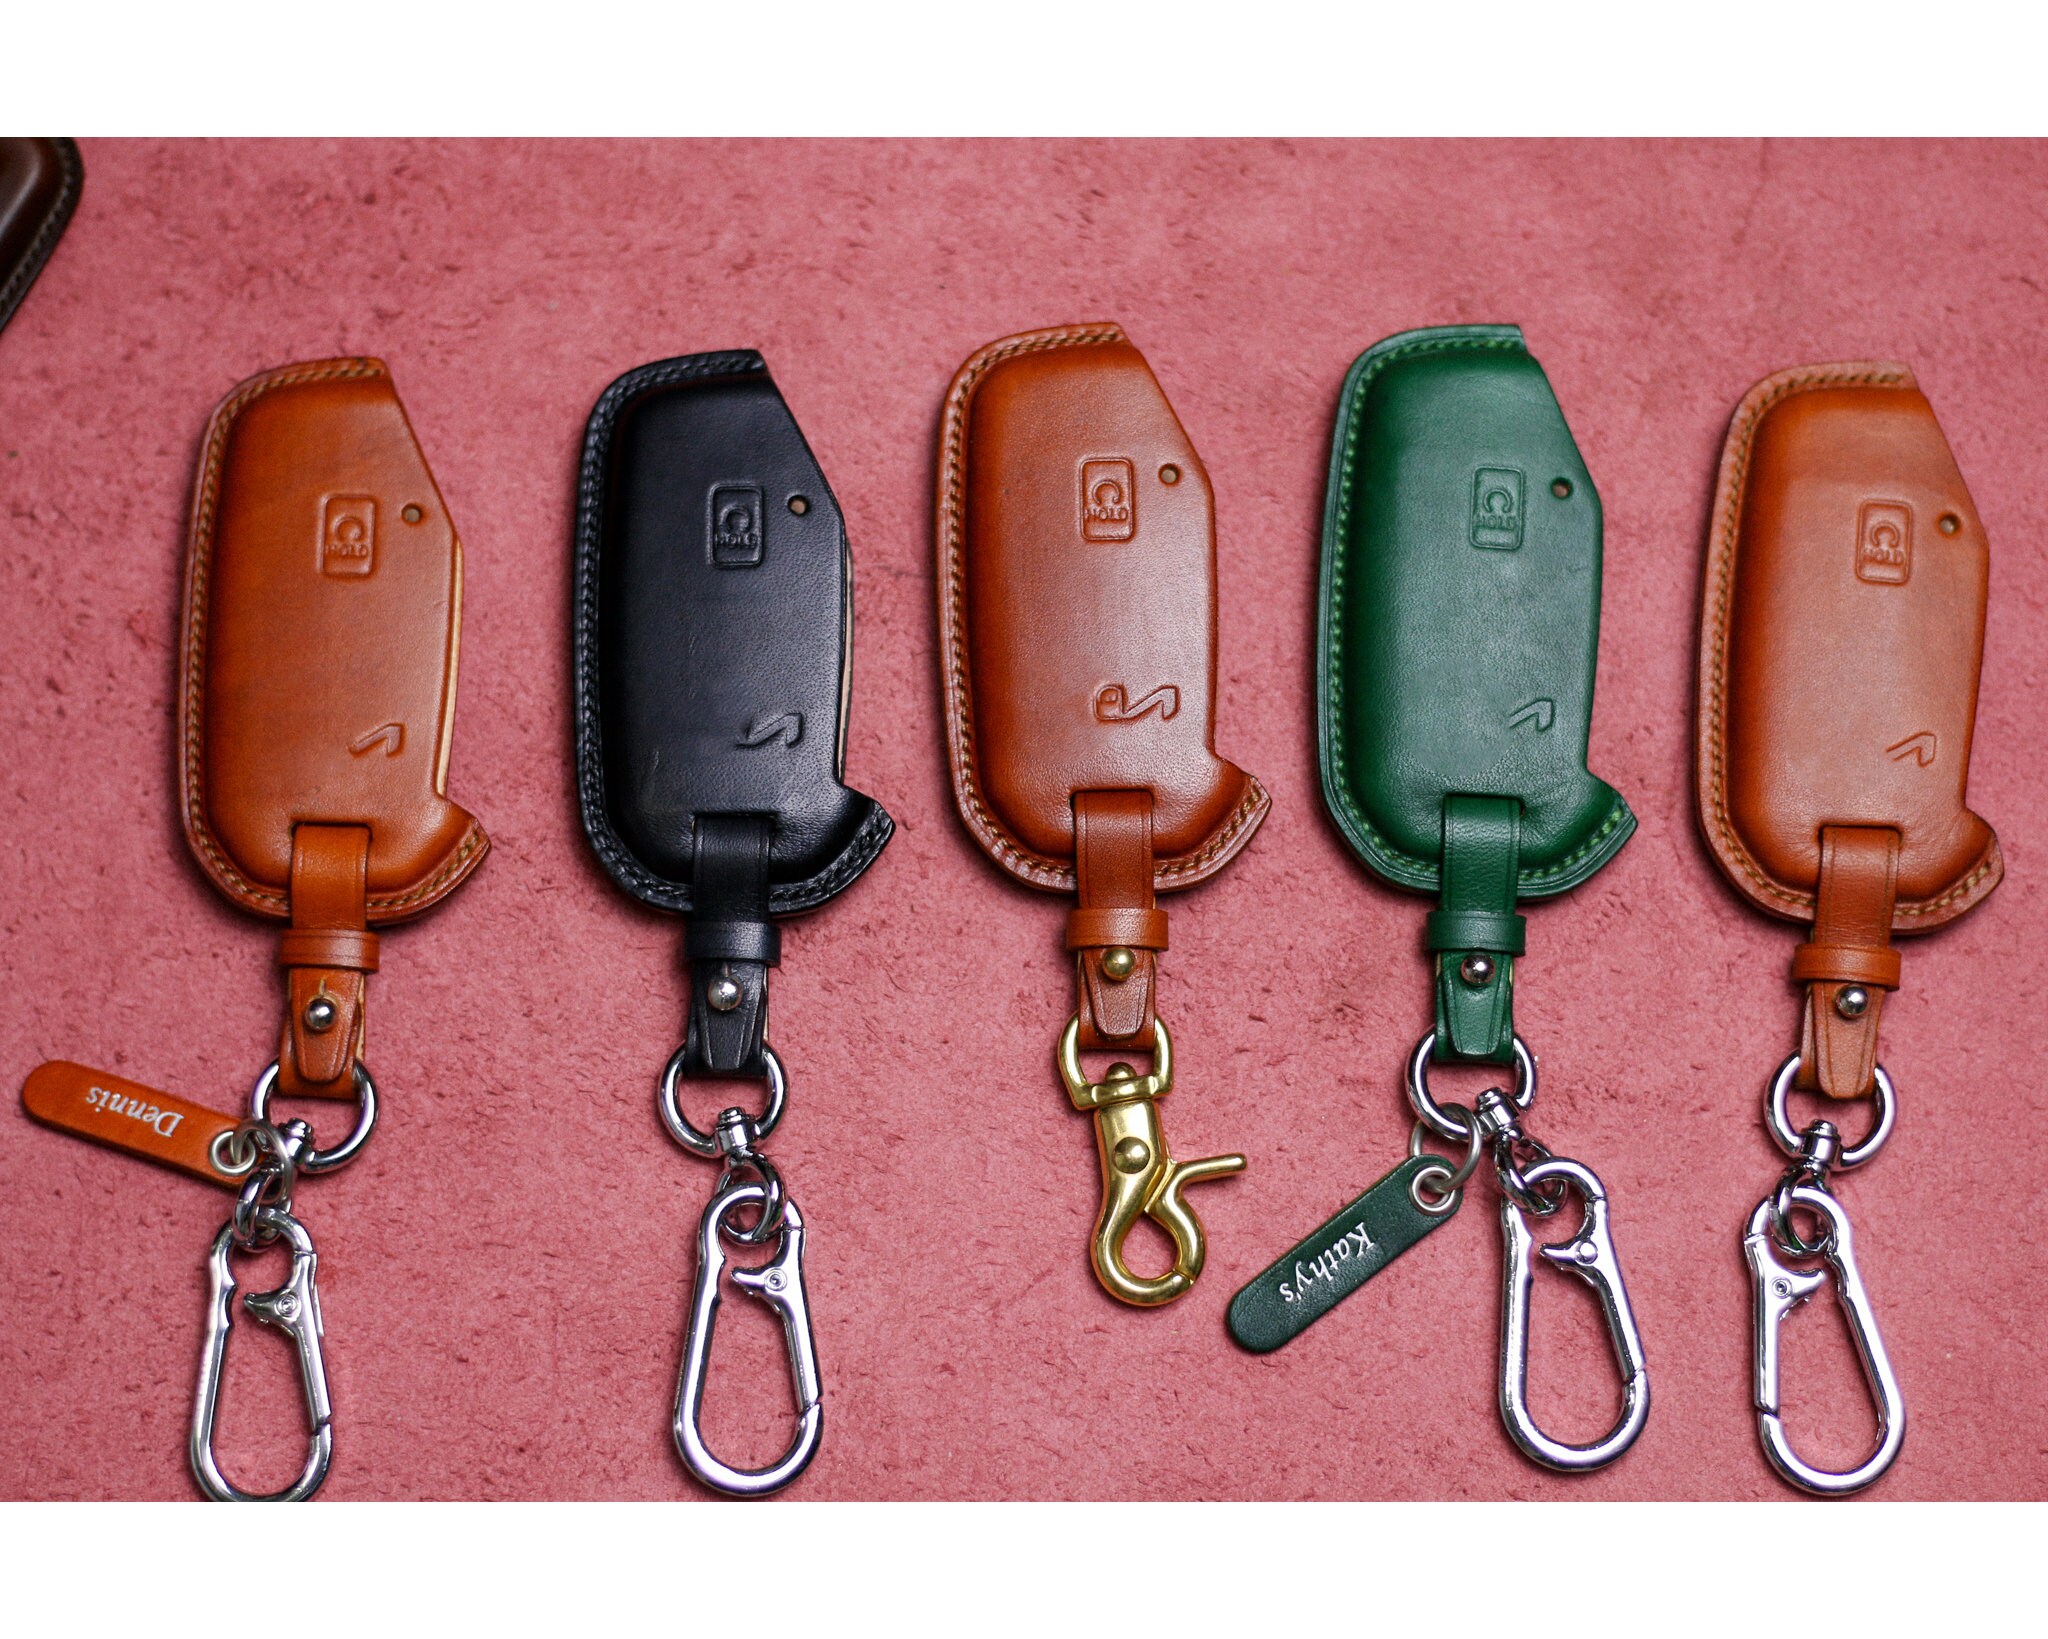 Super Cute Kia Key Fob Cover #kia #car #carthings #keyfob #keyfobcover